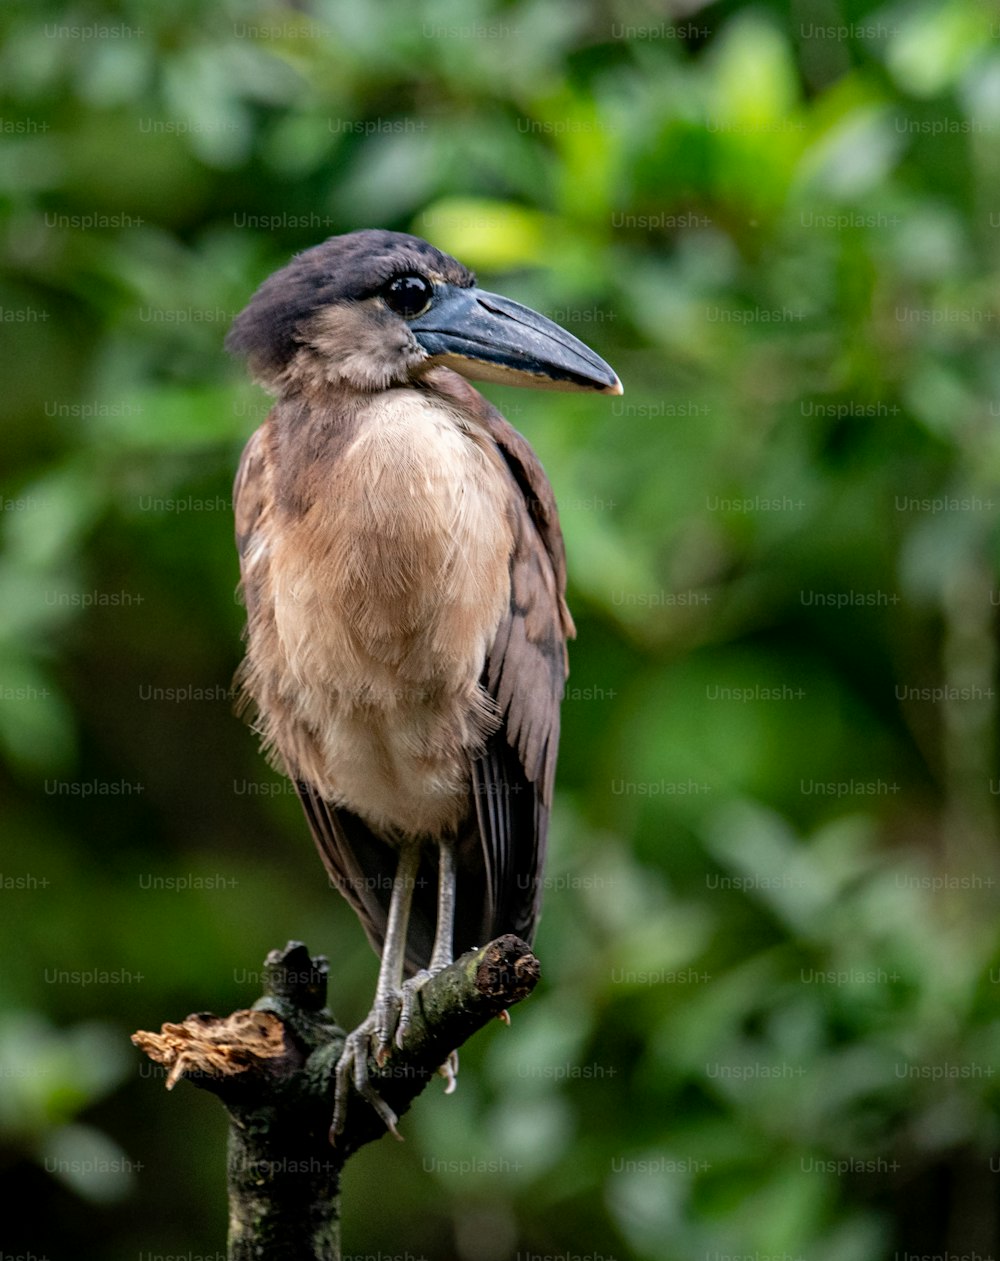 Boat billed heron in Costa Rica